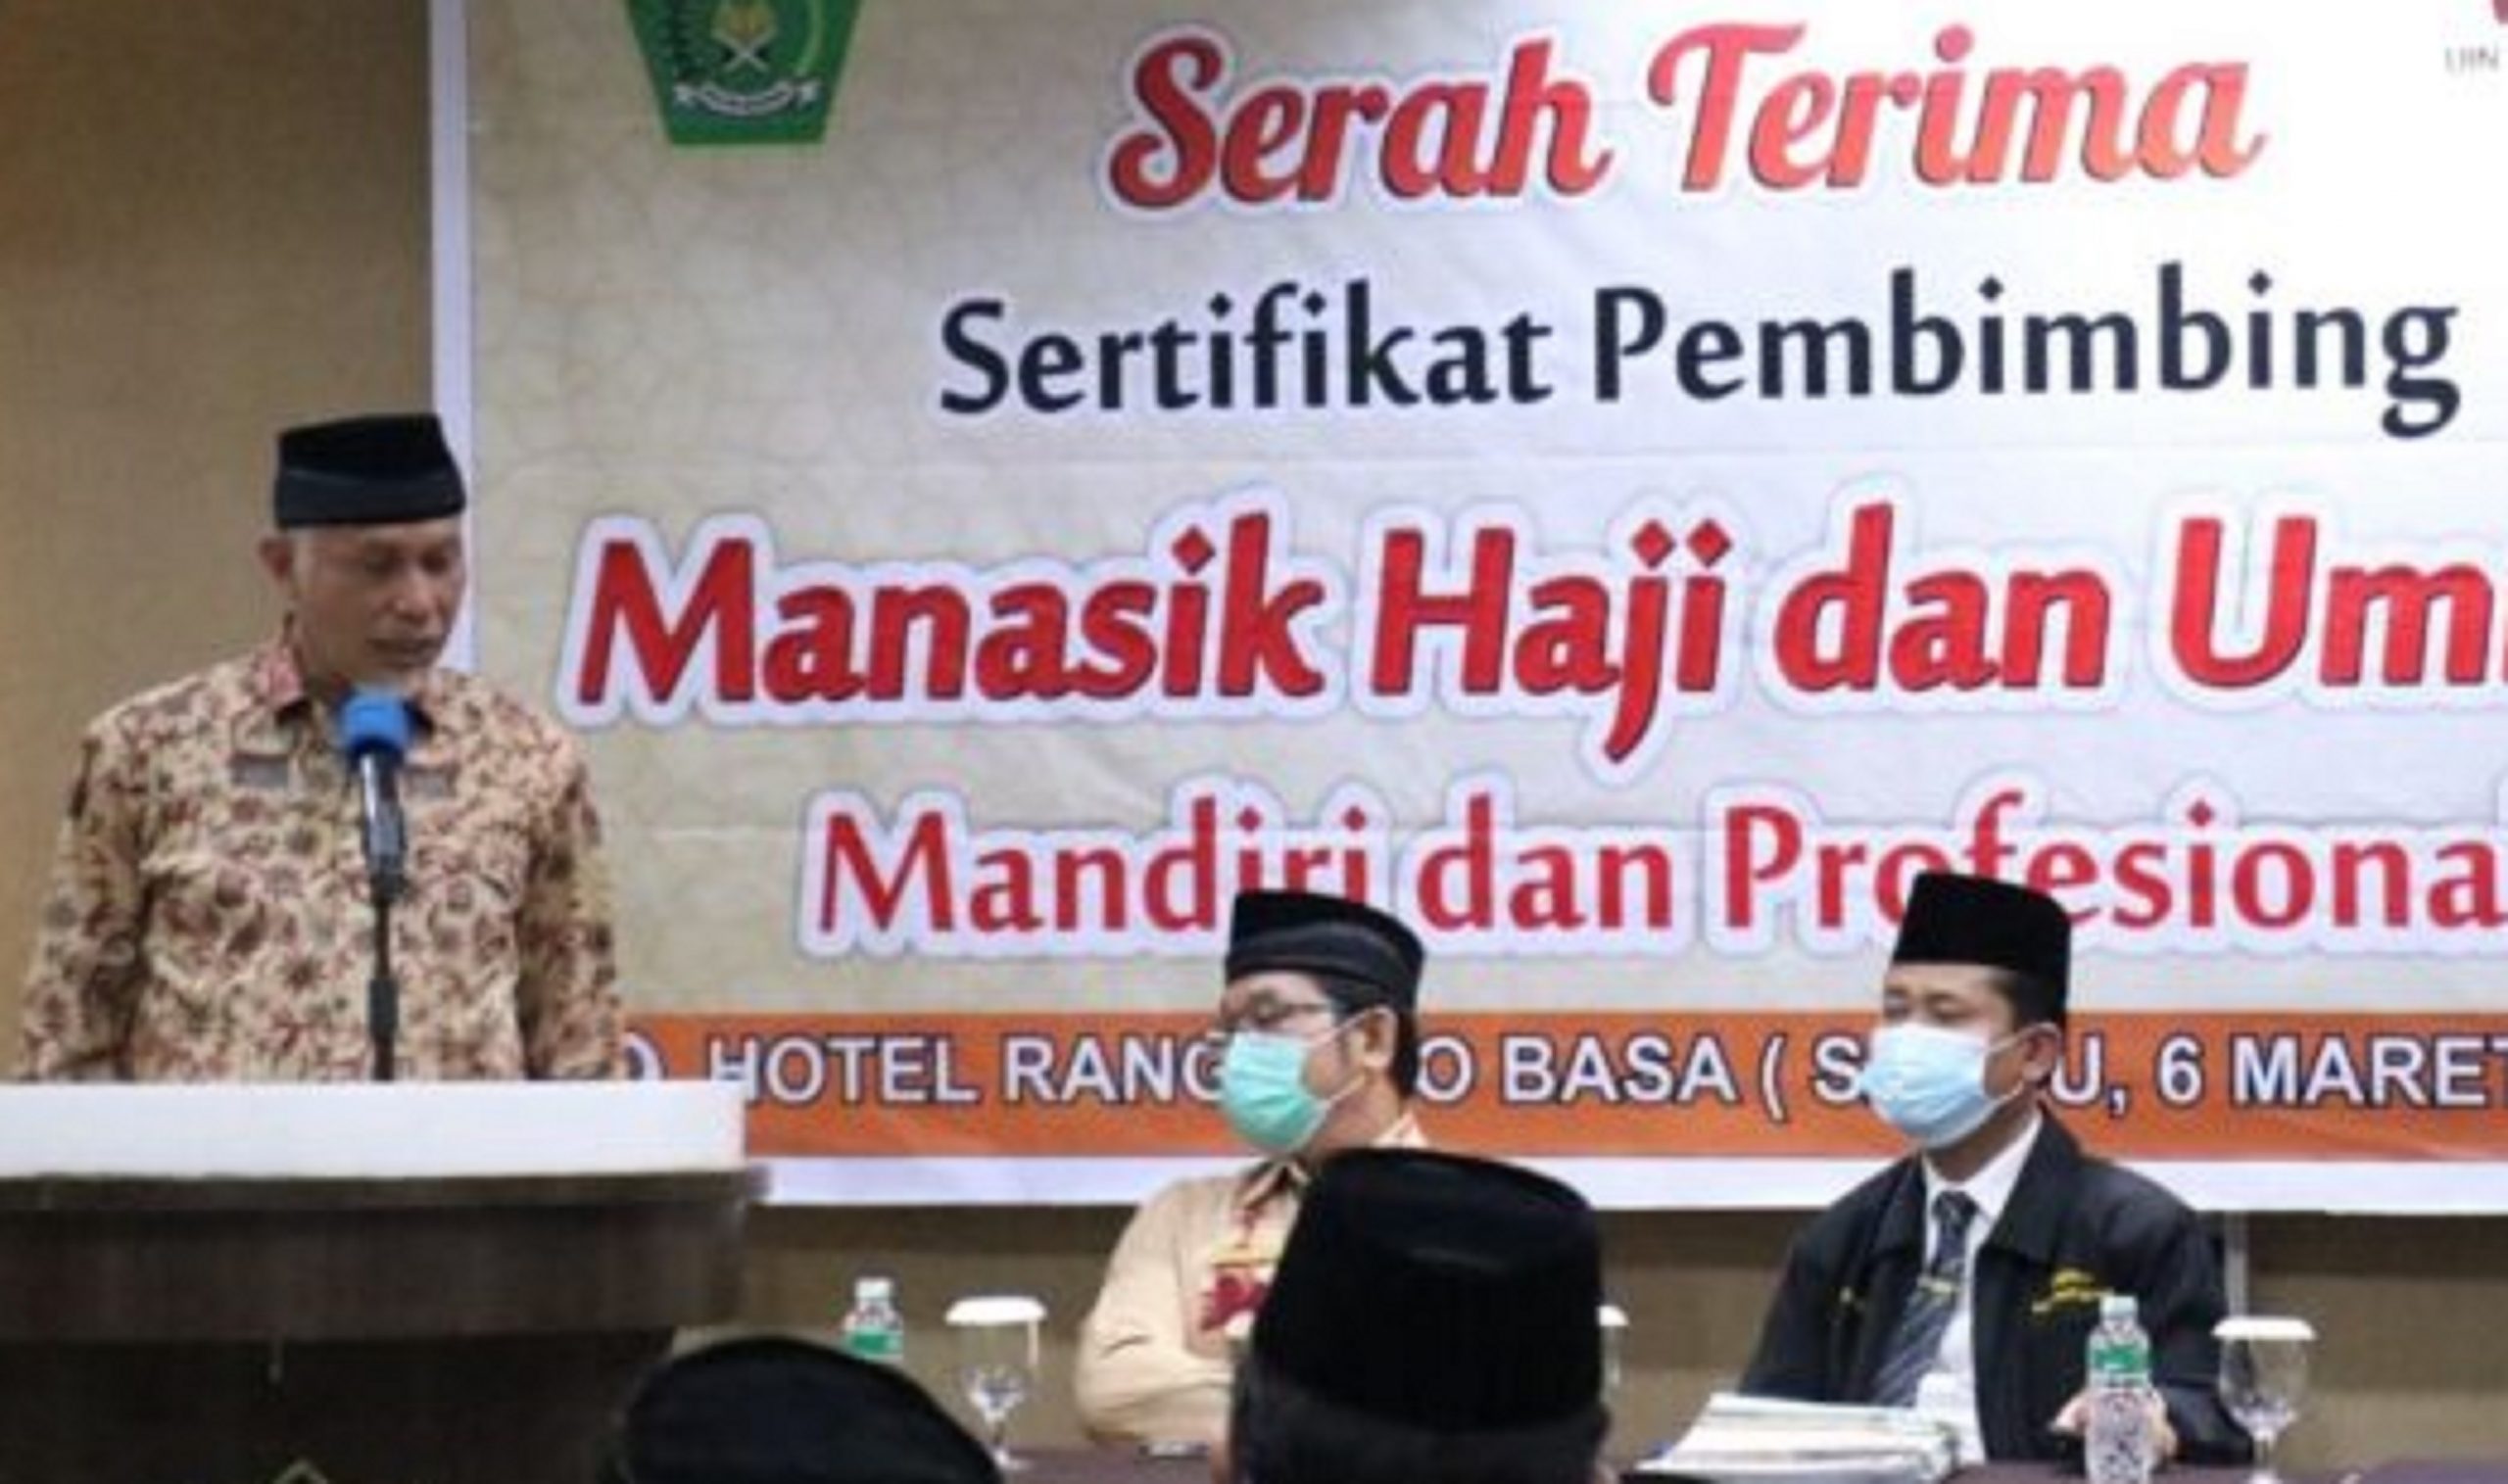 Gubernur Sumatera Barat Mahyeldi memberikan amanat saat sesi serah terima sertifikat pembimbing manasik haji dan umrah mandiri dan profesional, di Hotel Rangkayo Basa, Sabtu (6/3/2021). | Halonusa.com